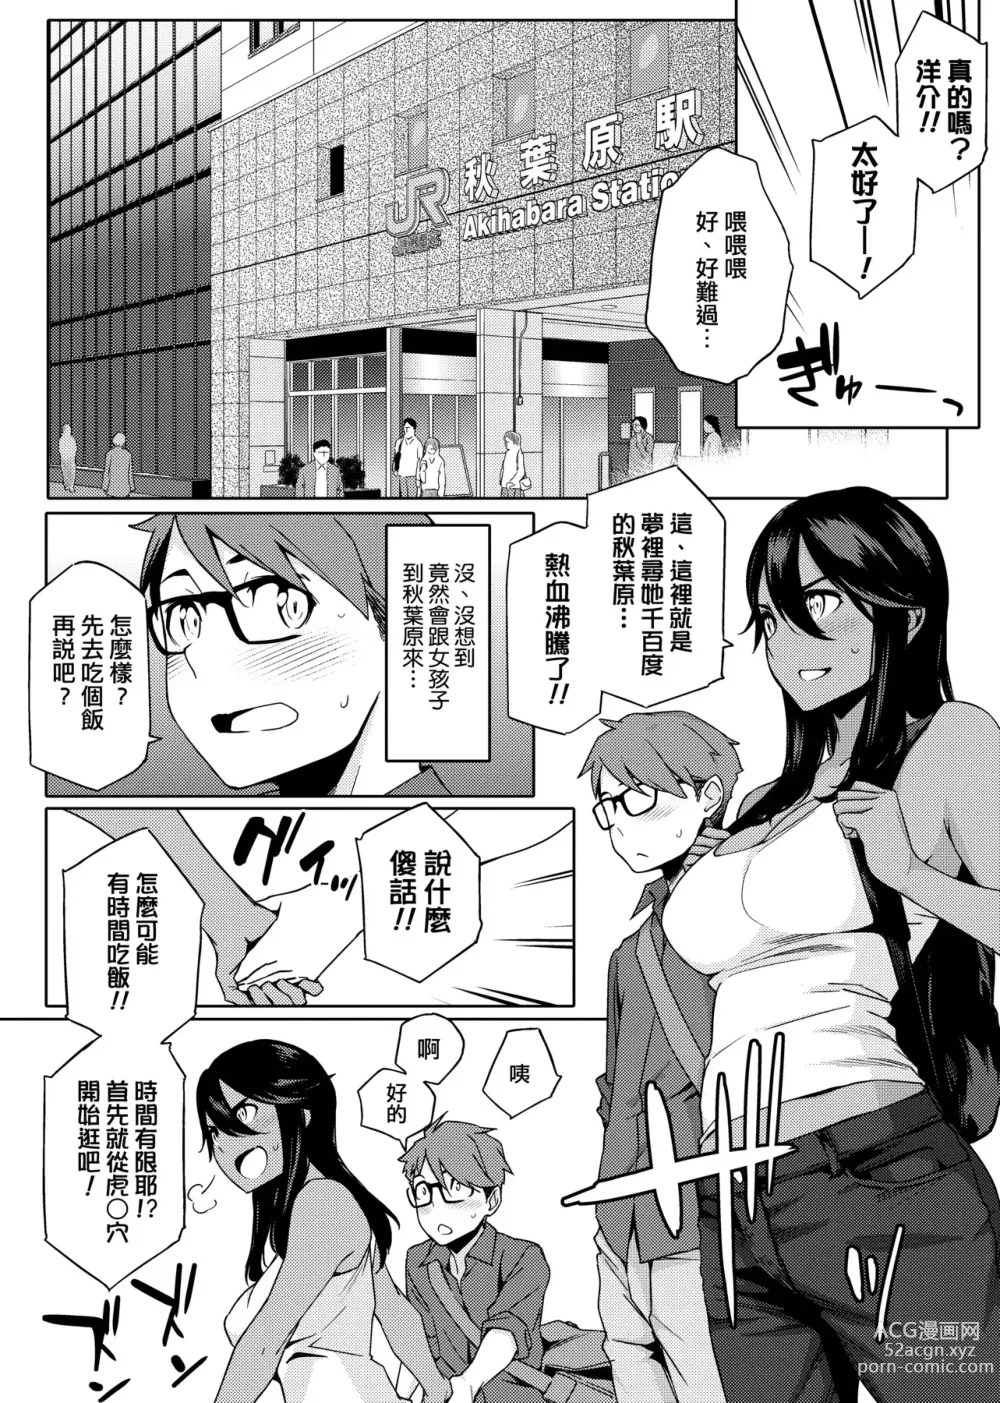 Page 15 of manga Natsu Koi Ota Girl - What Brings You to Japan?